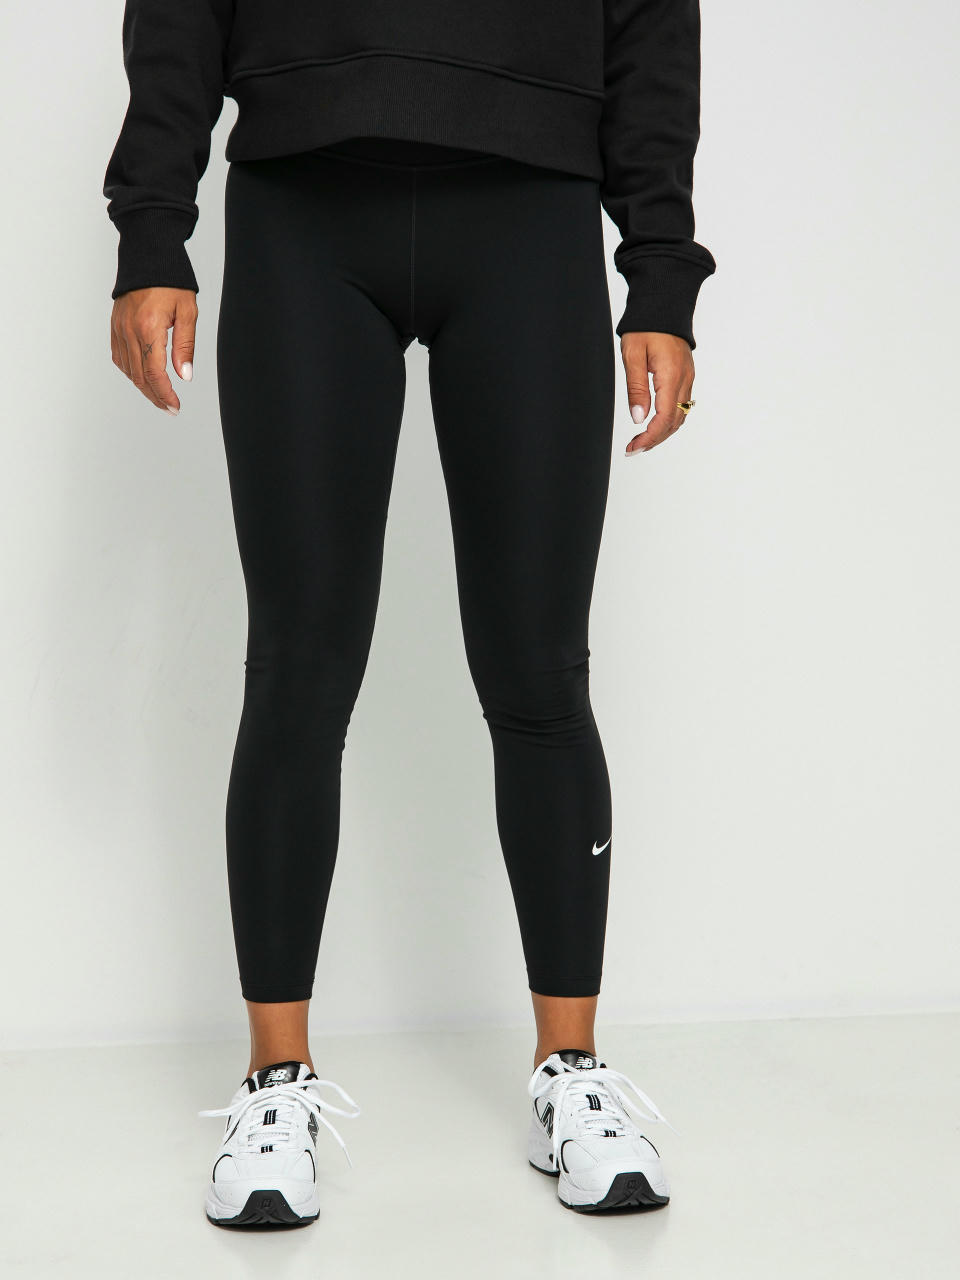 Leggings Nike SB women - Sale